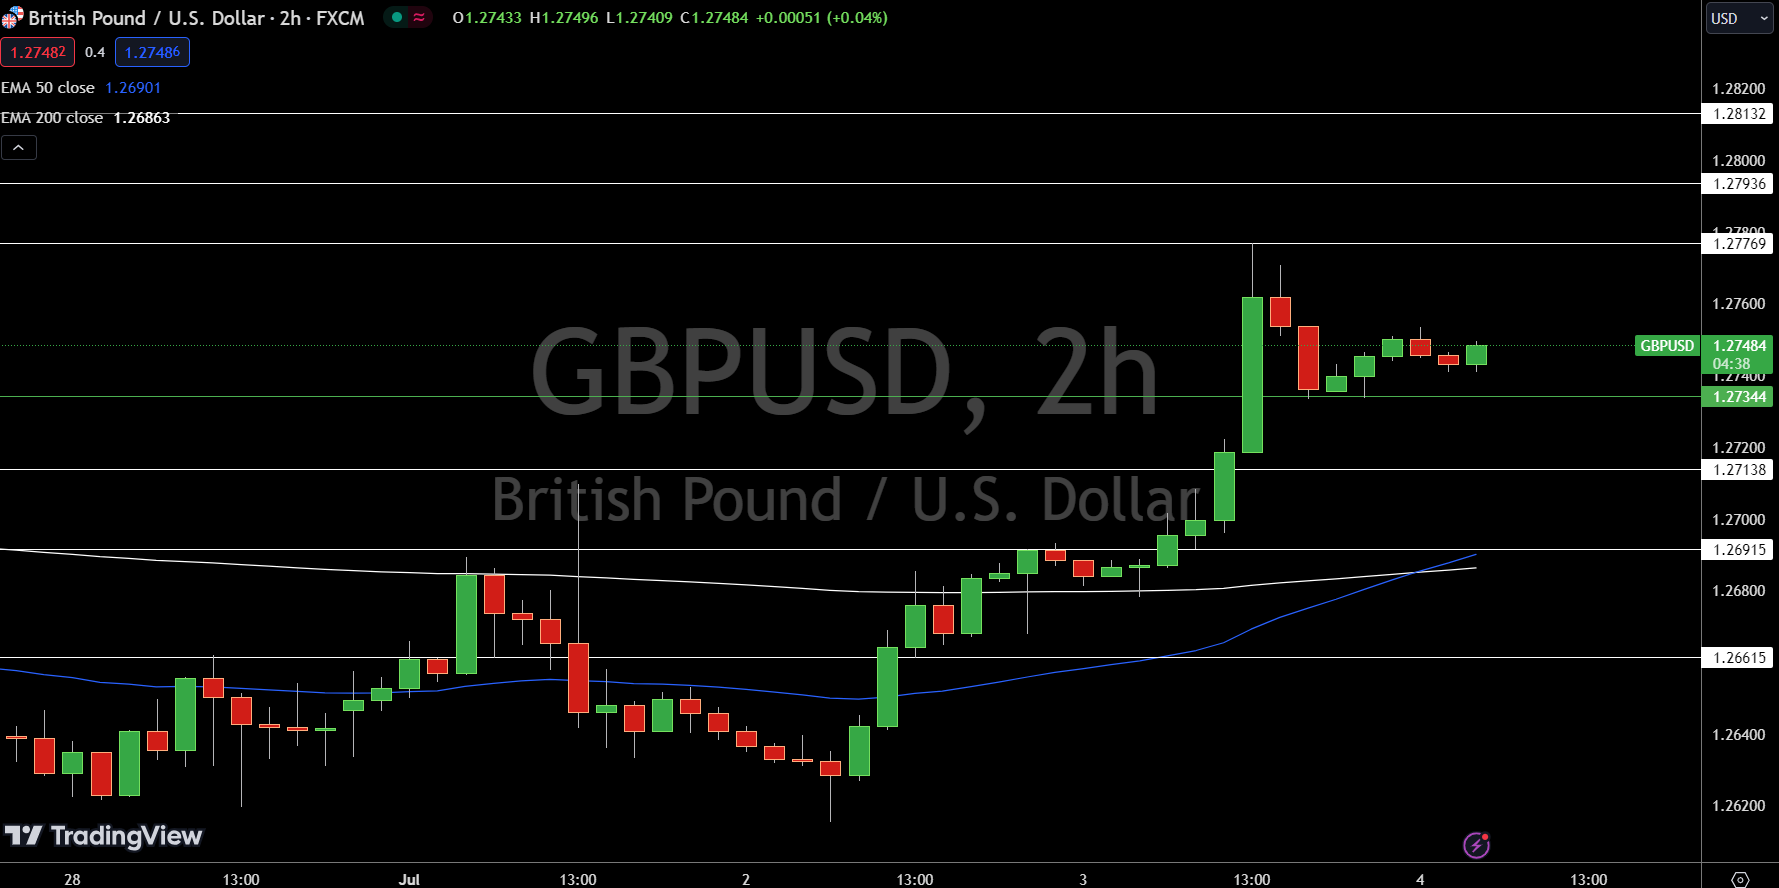 GBP/USD Price Chart - Source: Tradingview